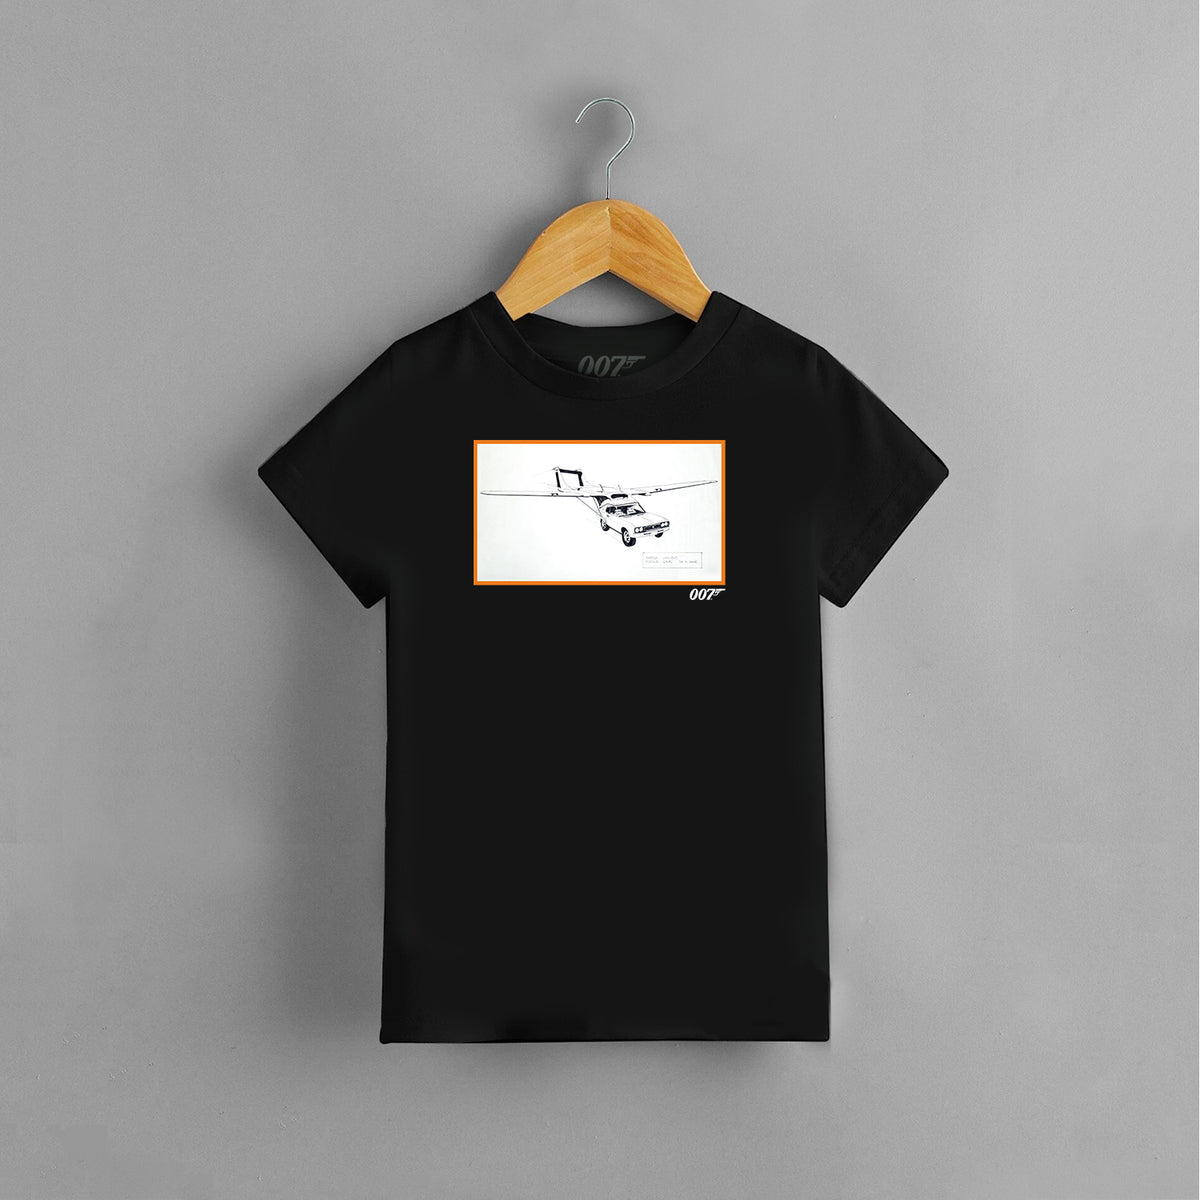 James Bond Kid/Teen Flying Car T-Shirt (6 colours)